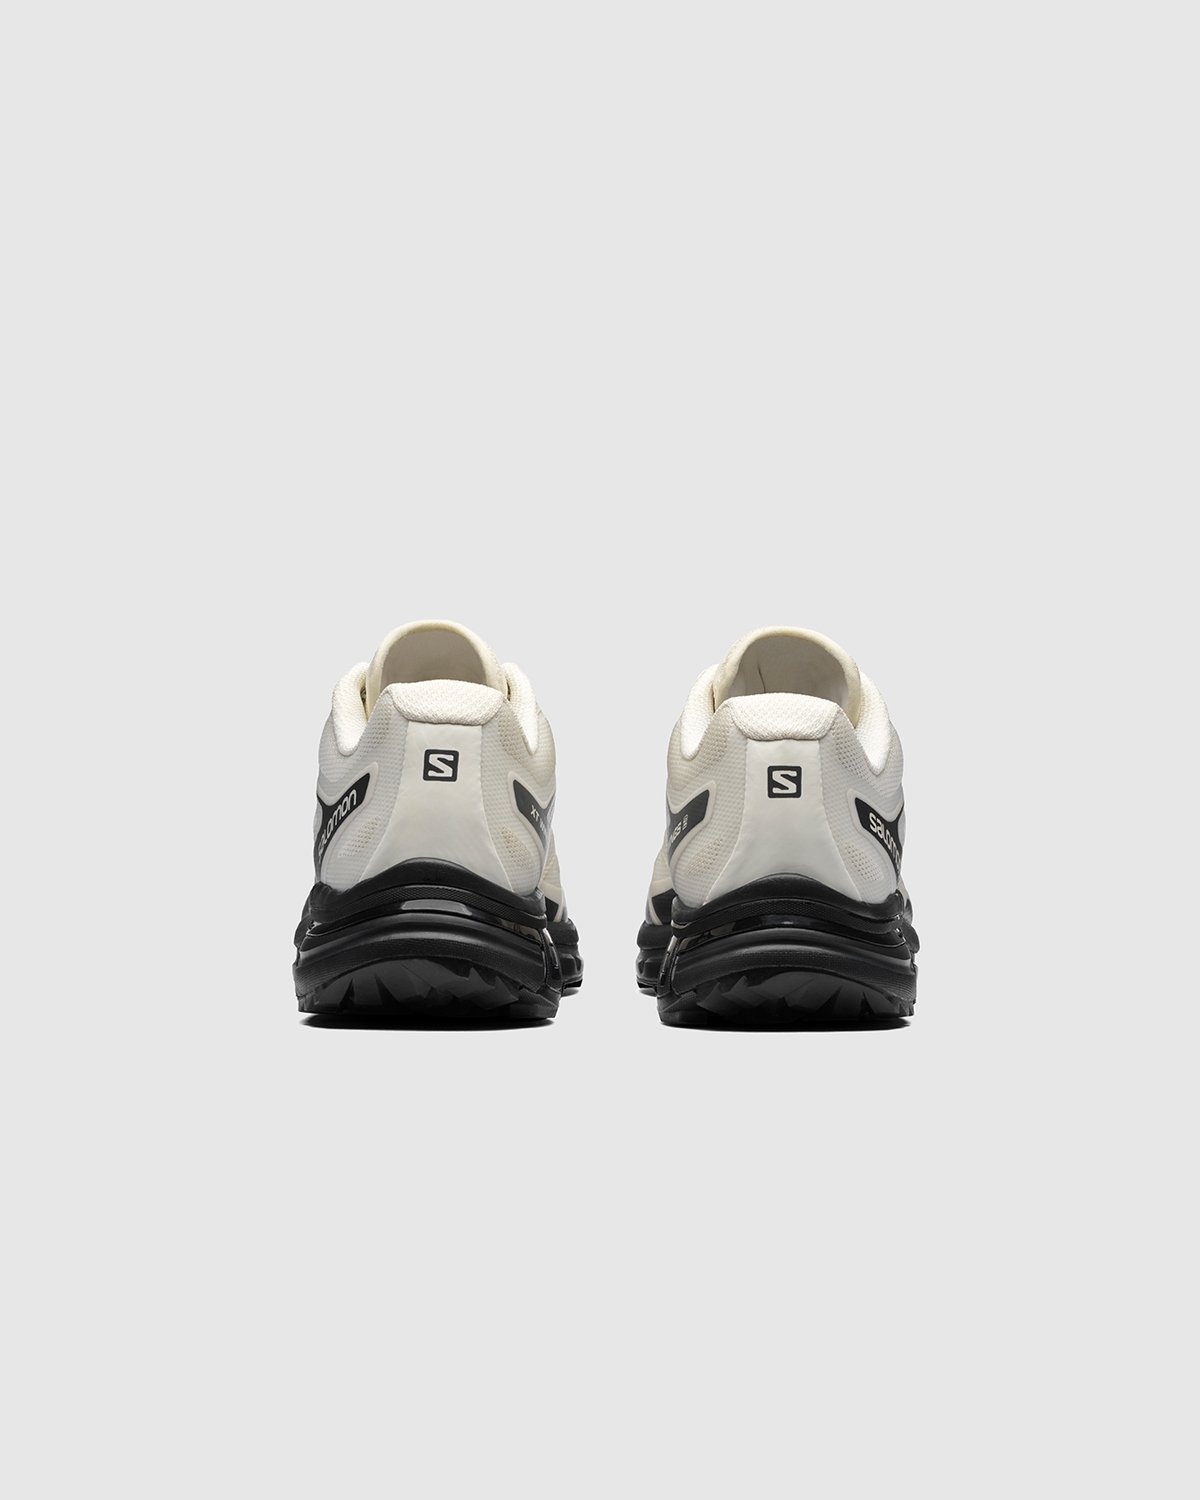 Salomon – XT-WINGS 2 ADVANCED Vanilla Ice/Phantom/Black - Sneakers - Beige - Image 4